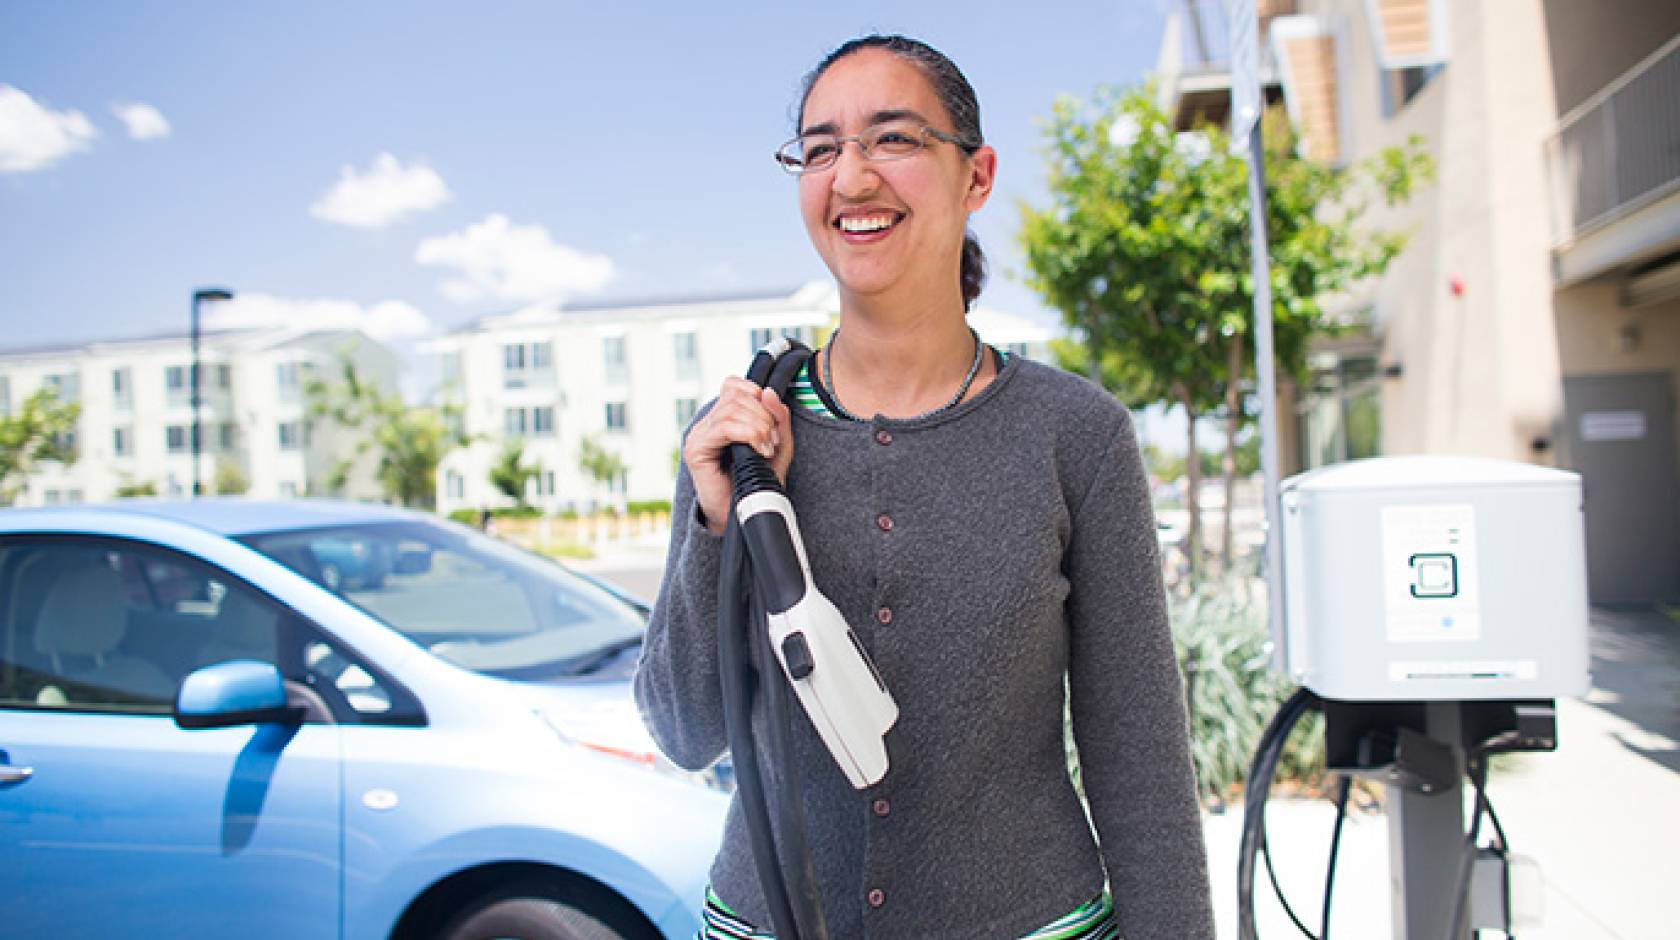 Dahlia Garas plugging in her electric vehicle at UC Davis' West Village